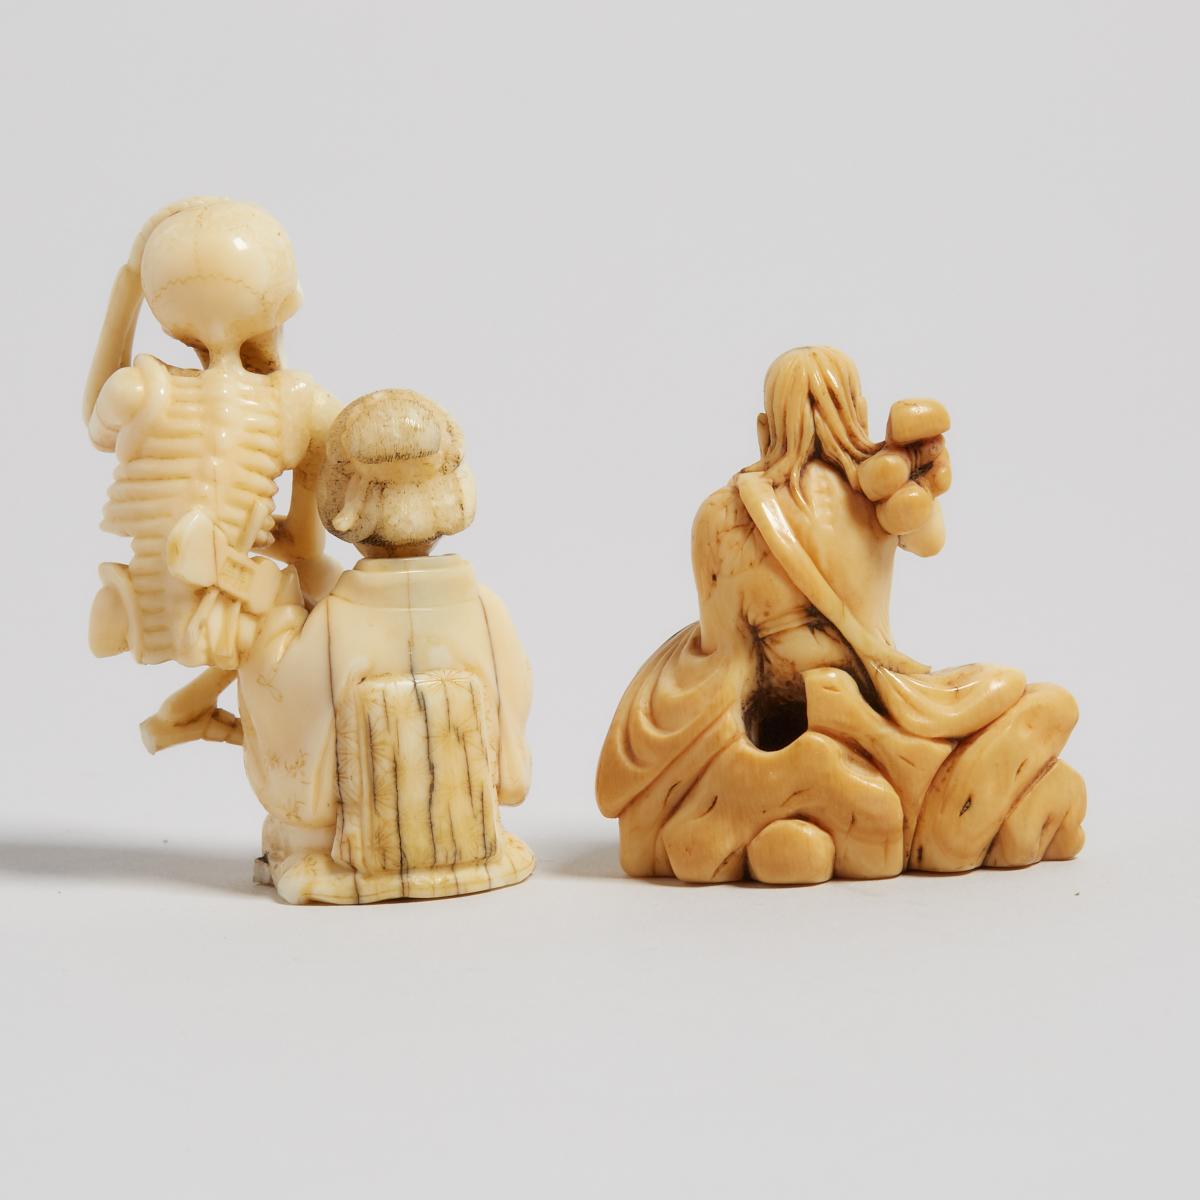 Two Ivory and Bone Carved Figural Netsuke, Edo/Meiji Period, 江戶／明治時期 牙雕石上僧 骨雕三味線演奏者一組兩件, largest hei - Image 2 of 7